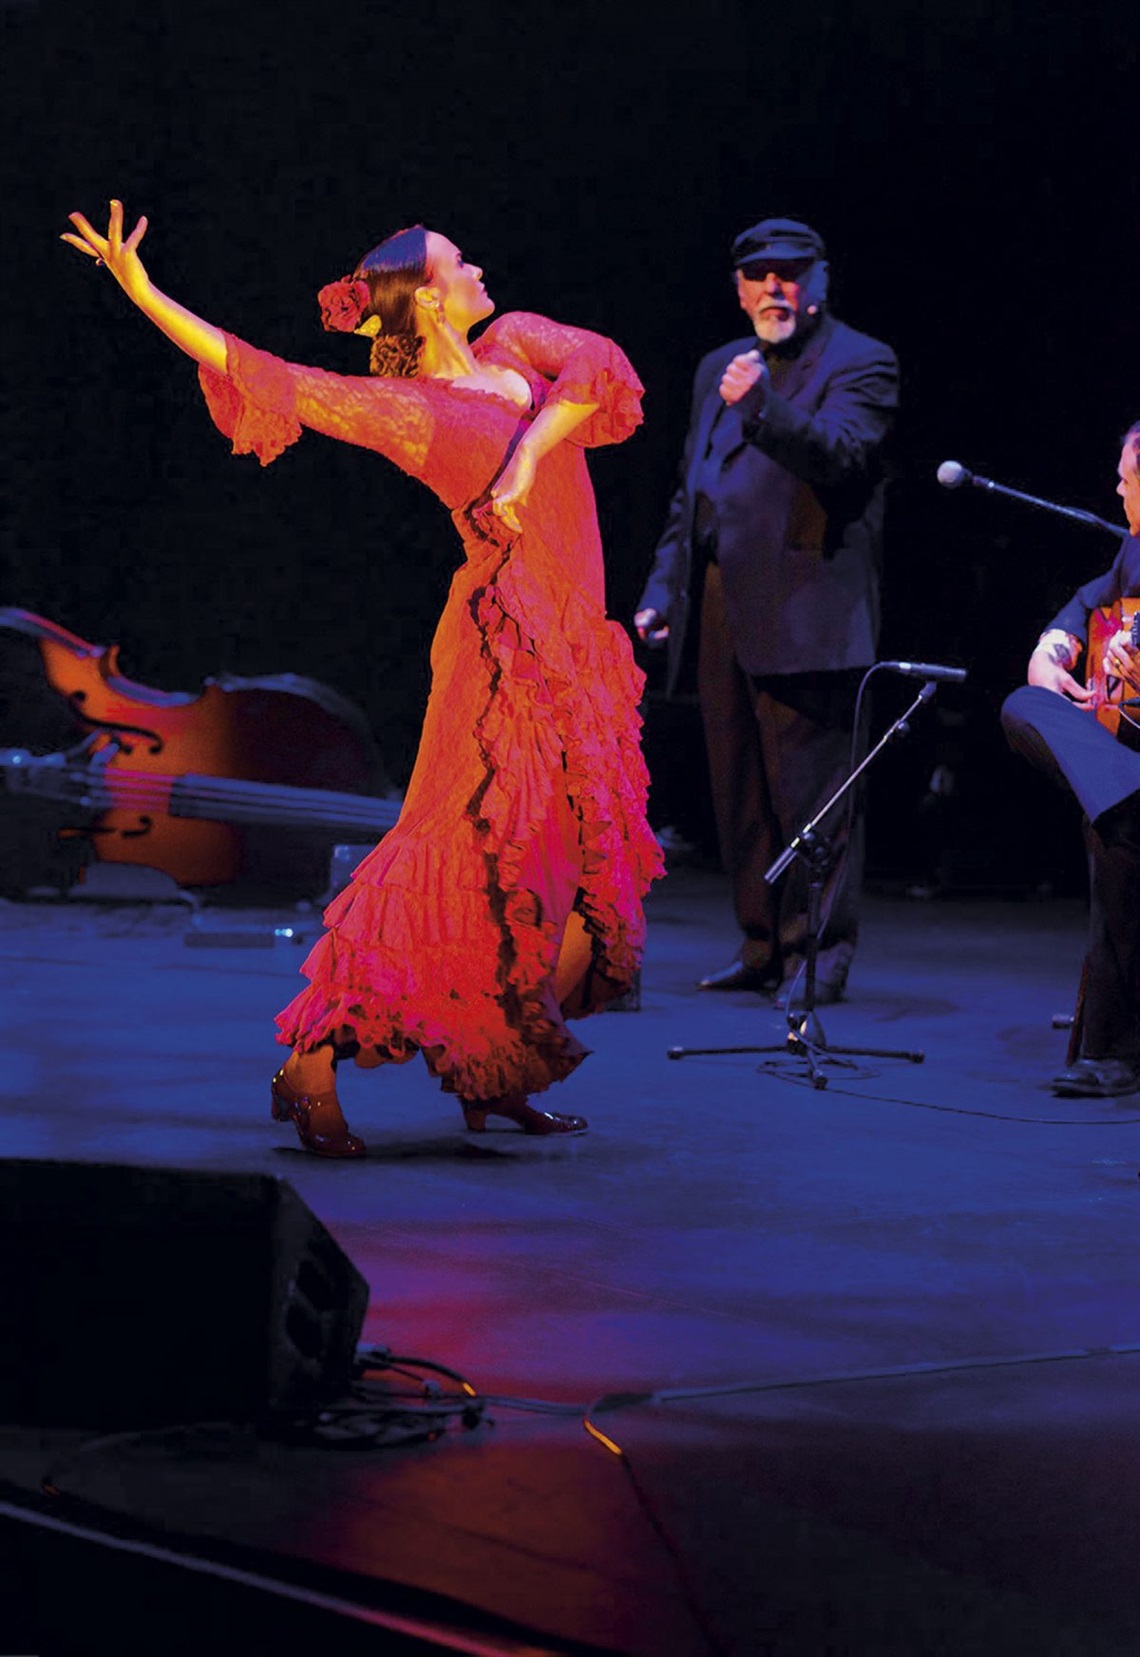 Kristy Manuel from Casa de Flamenco